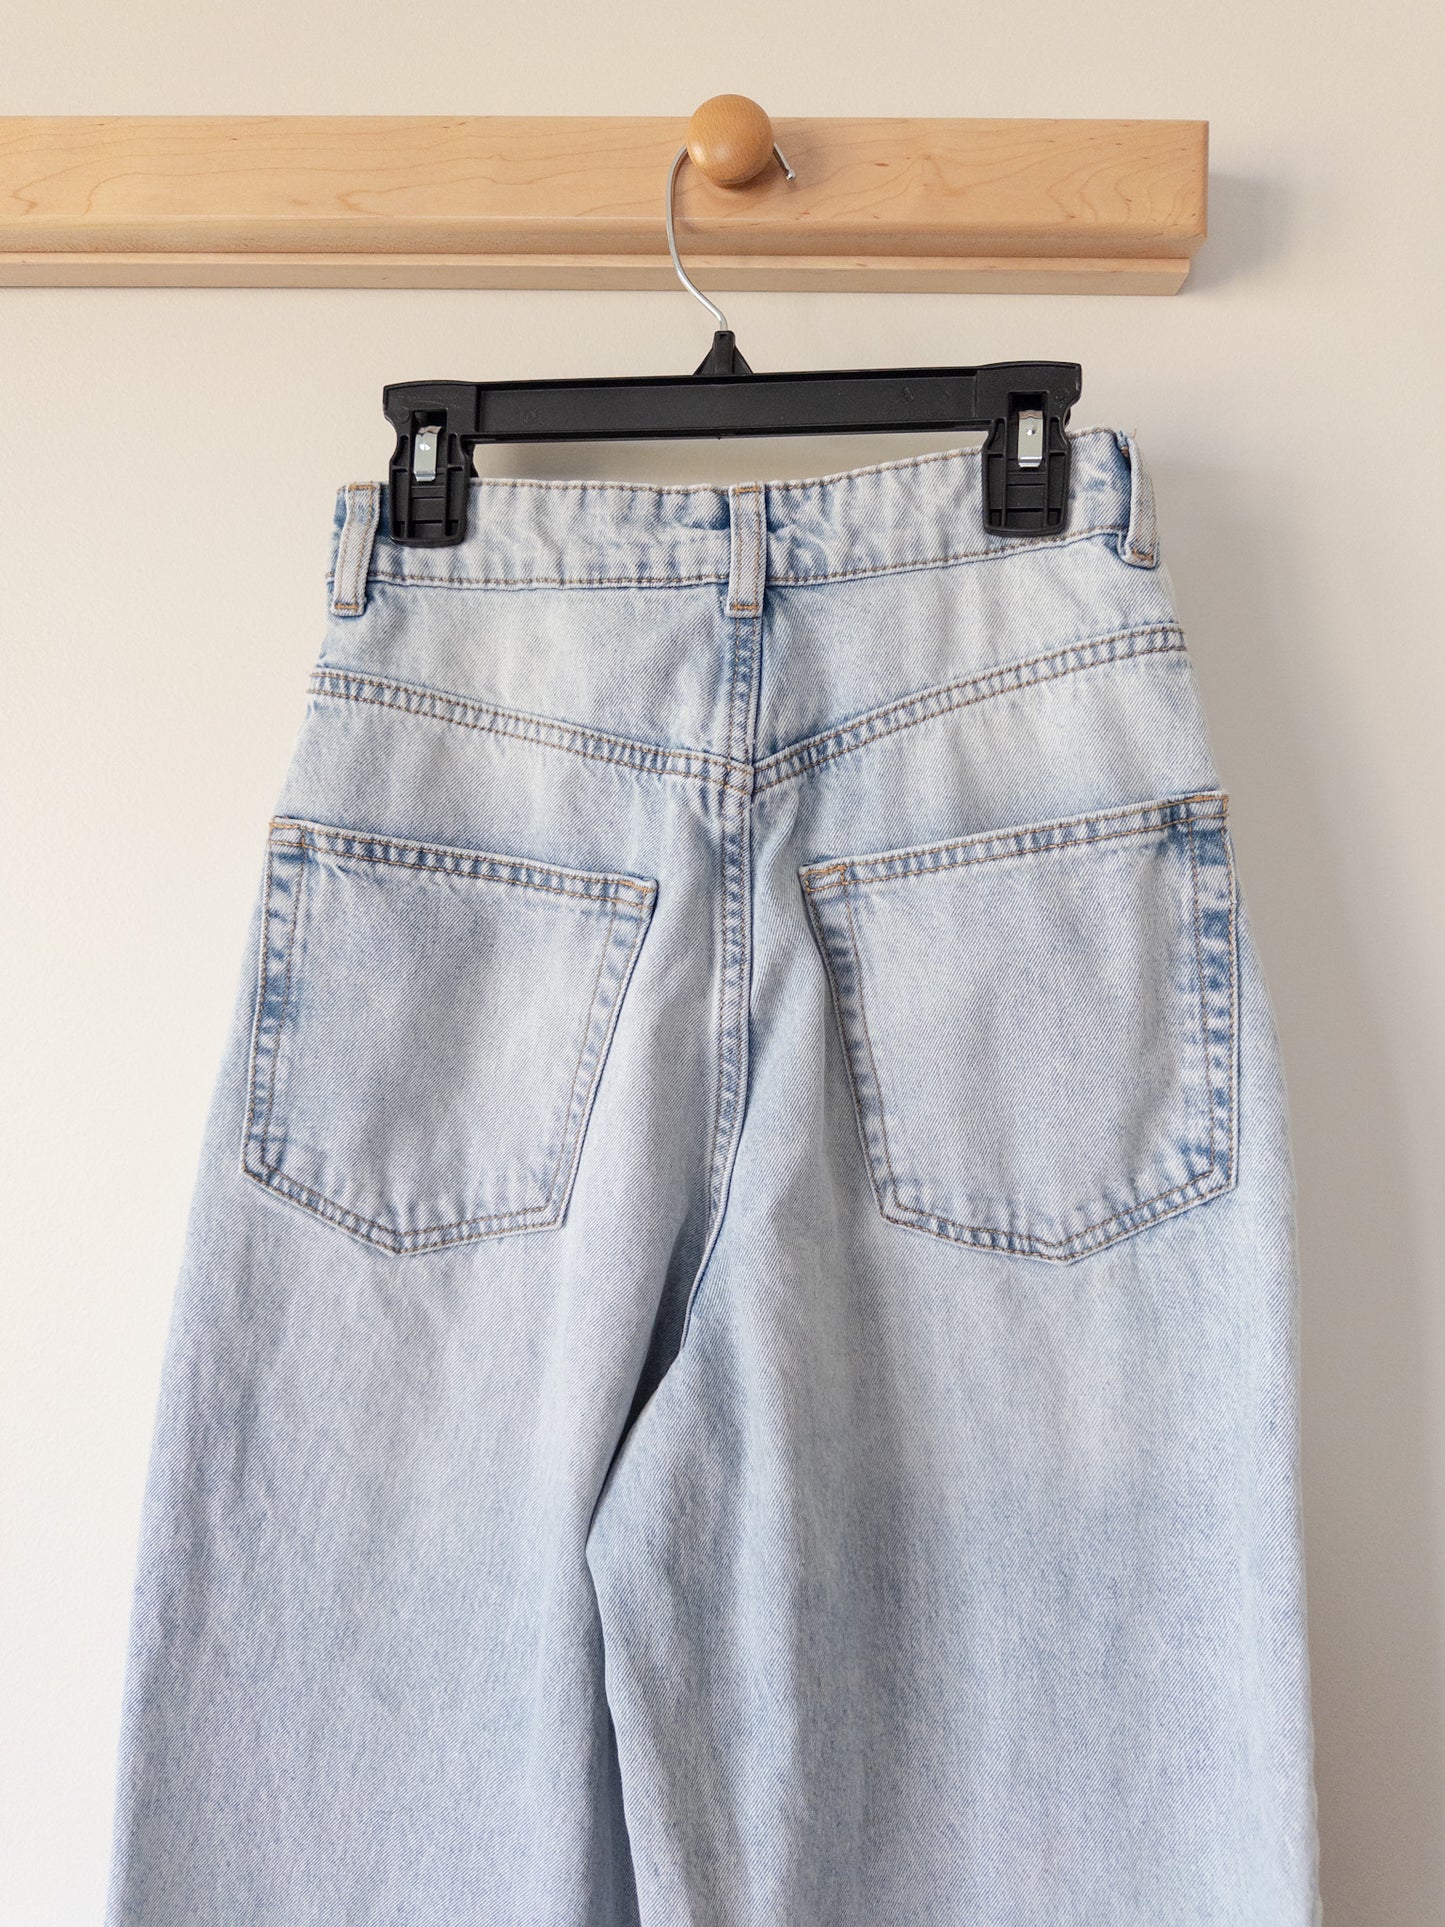 H&M Size 0 High Waist Wide Leg Jeans - EUC